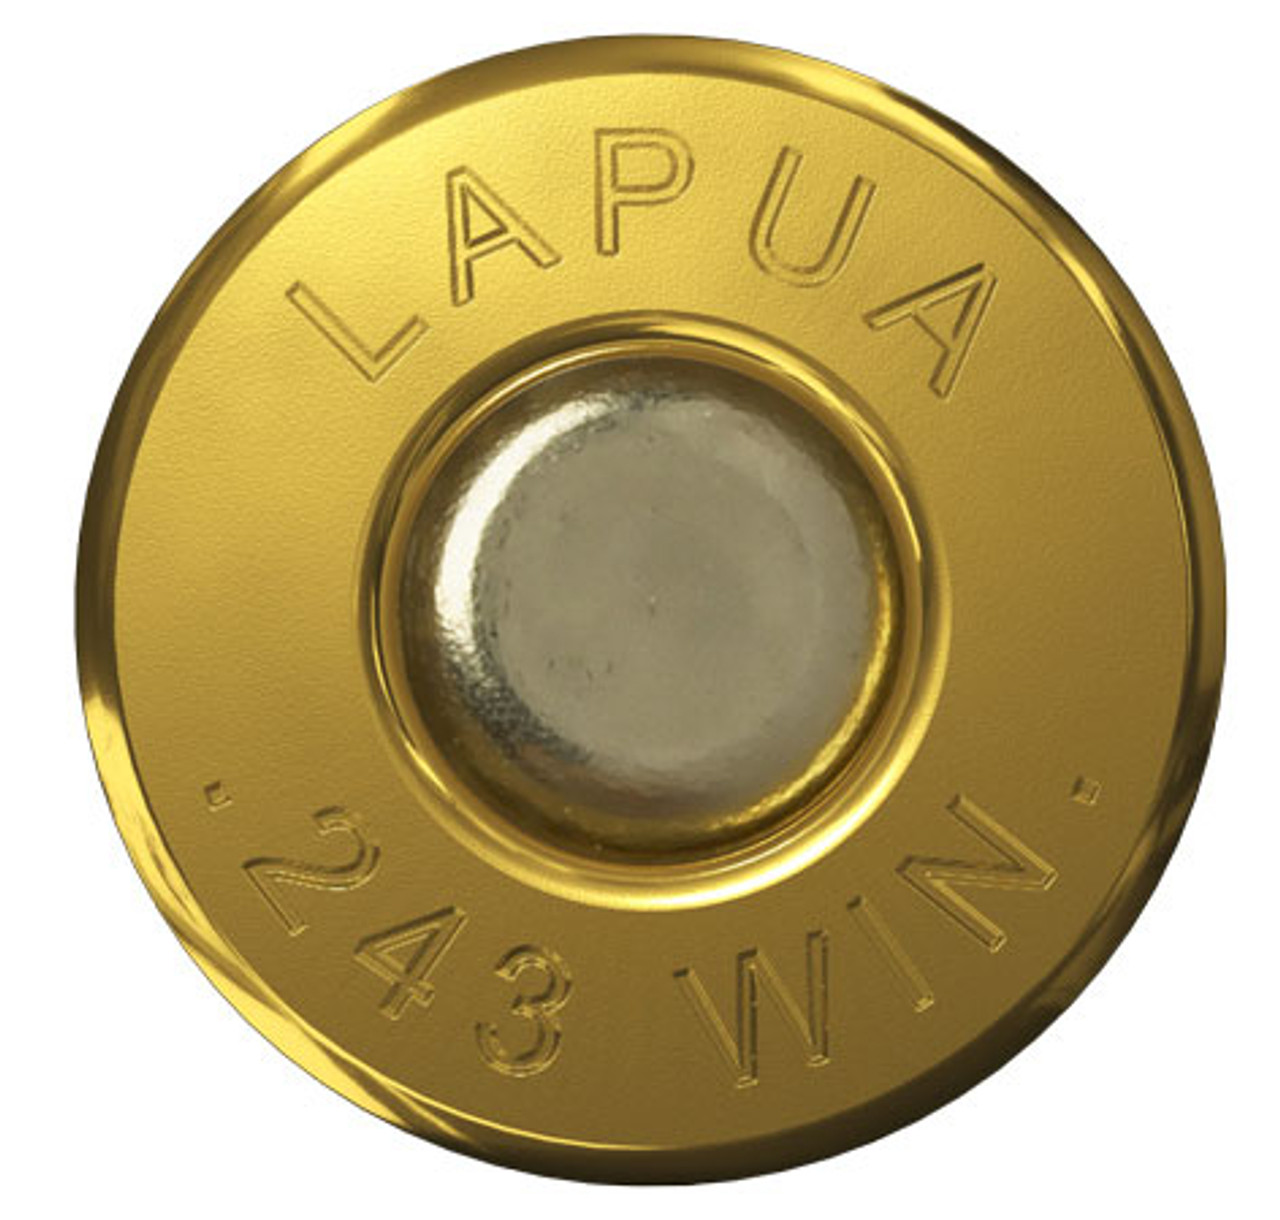 Lapua 243 Winchester Reloading Brass 100ct